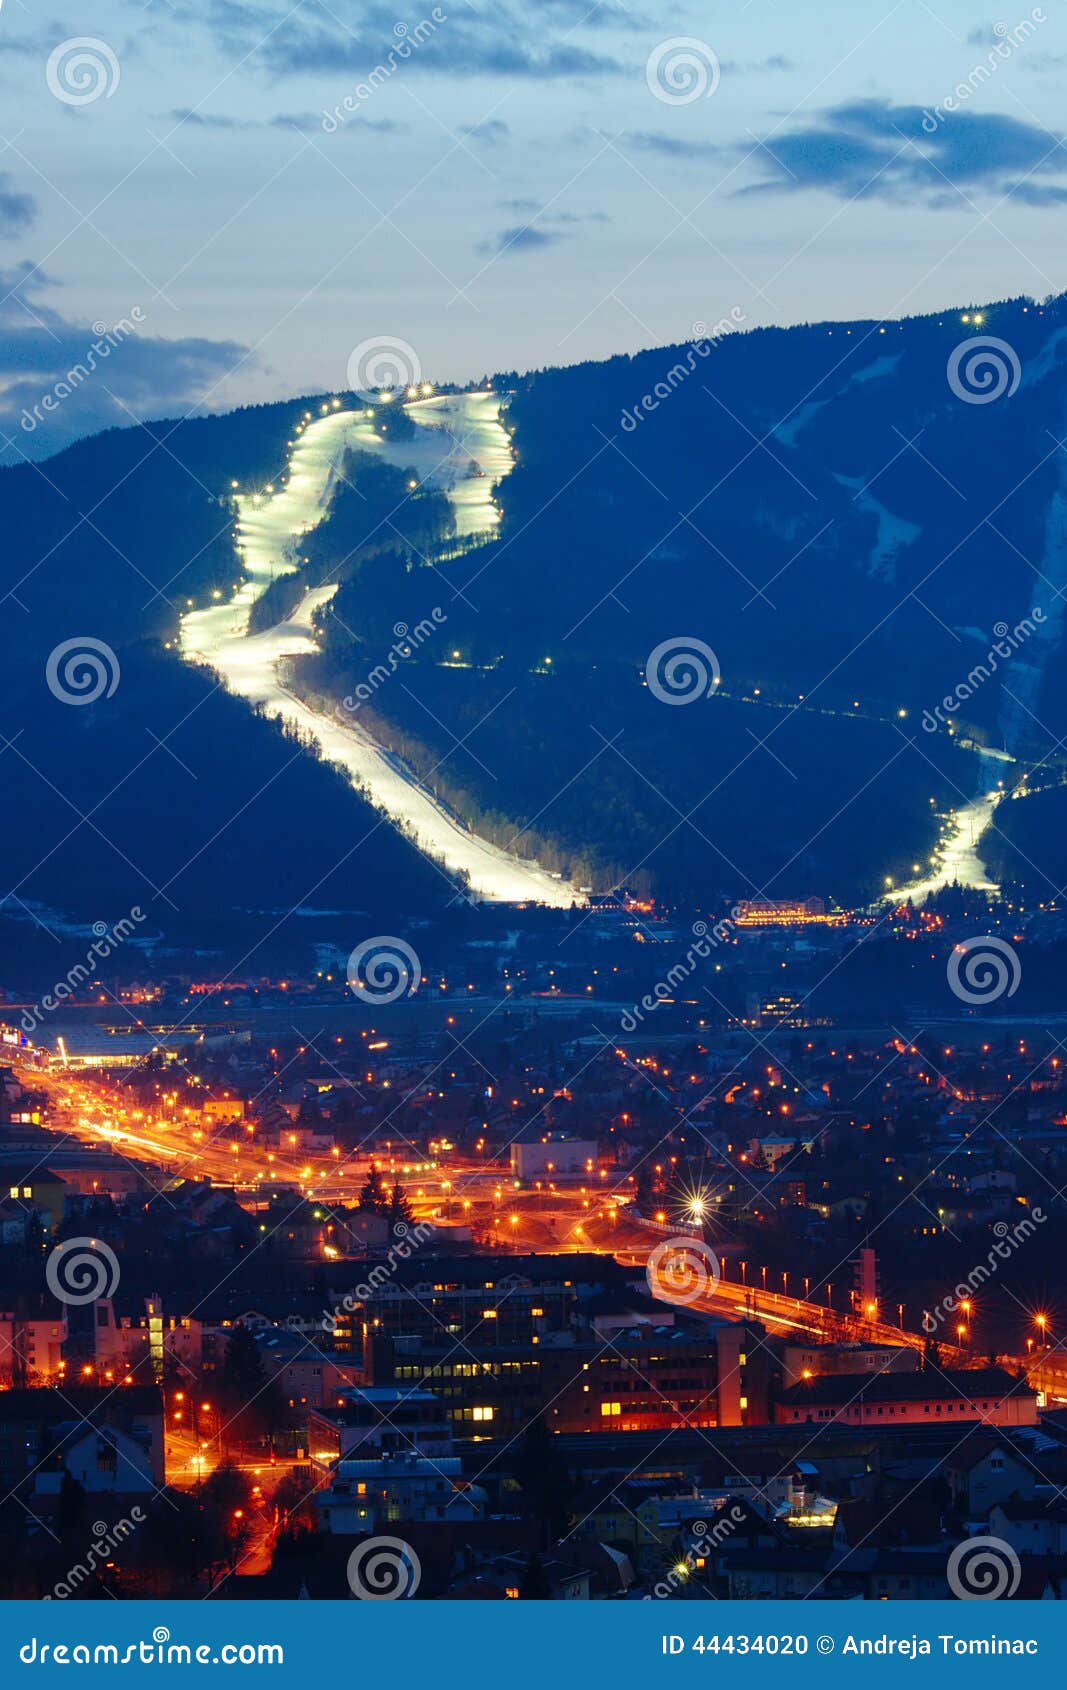 ski slopes above city